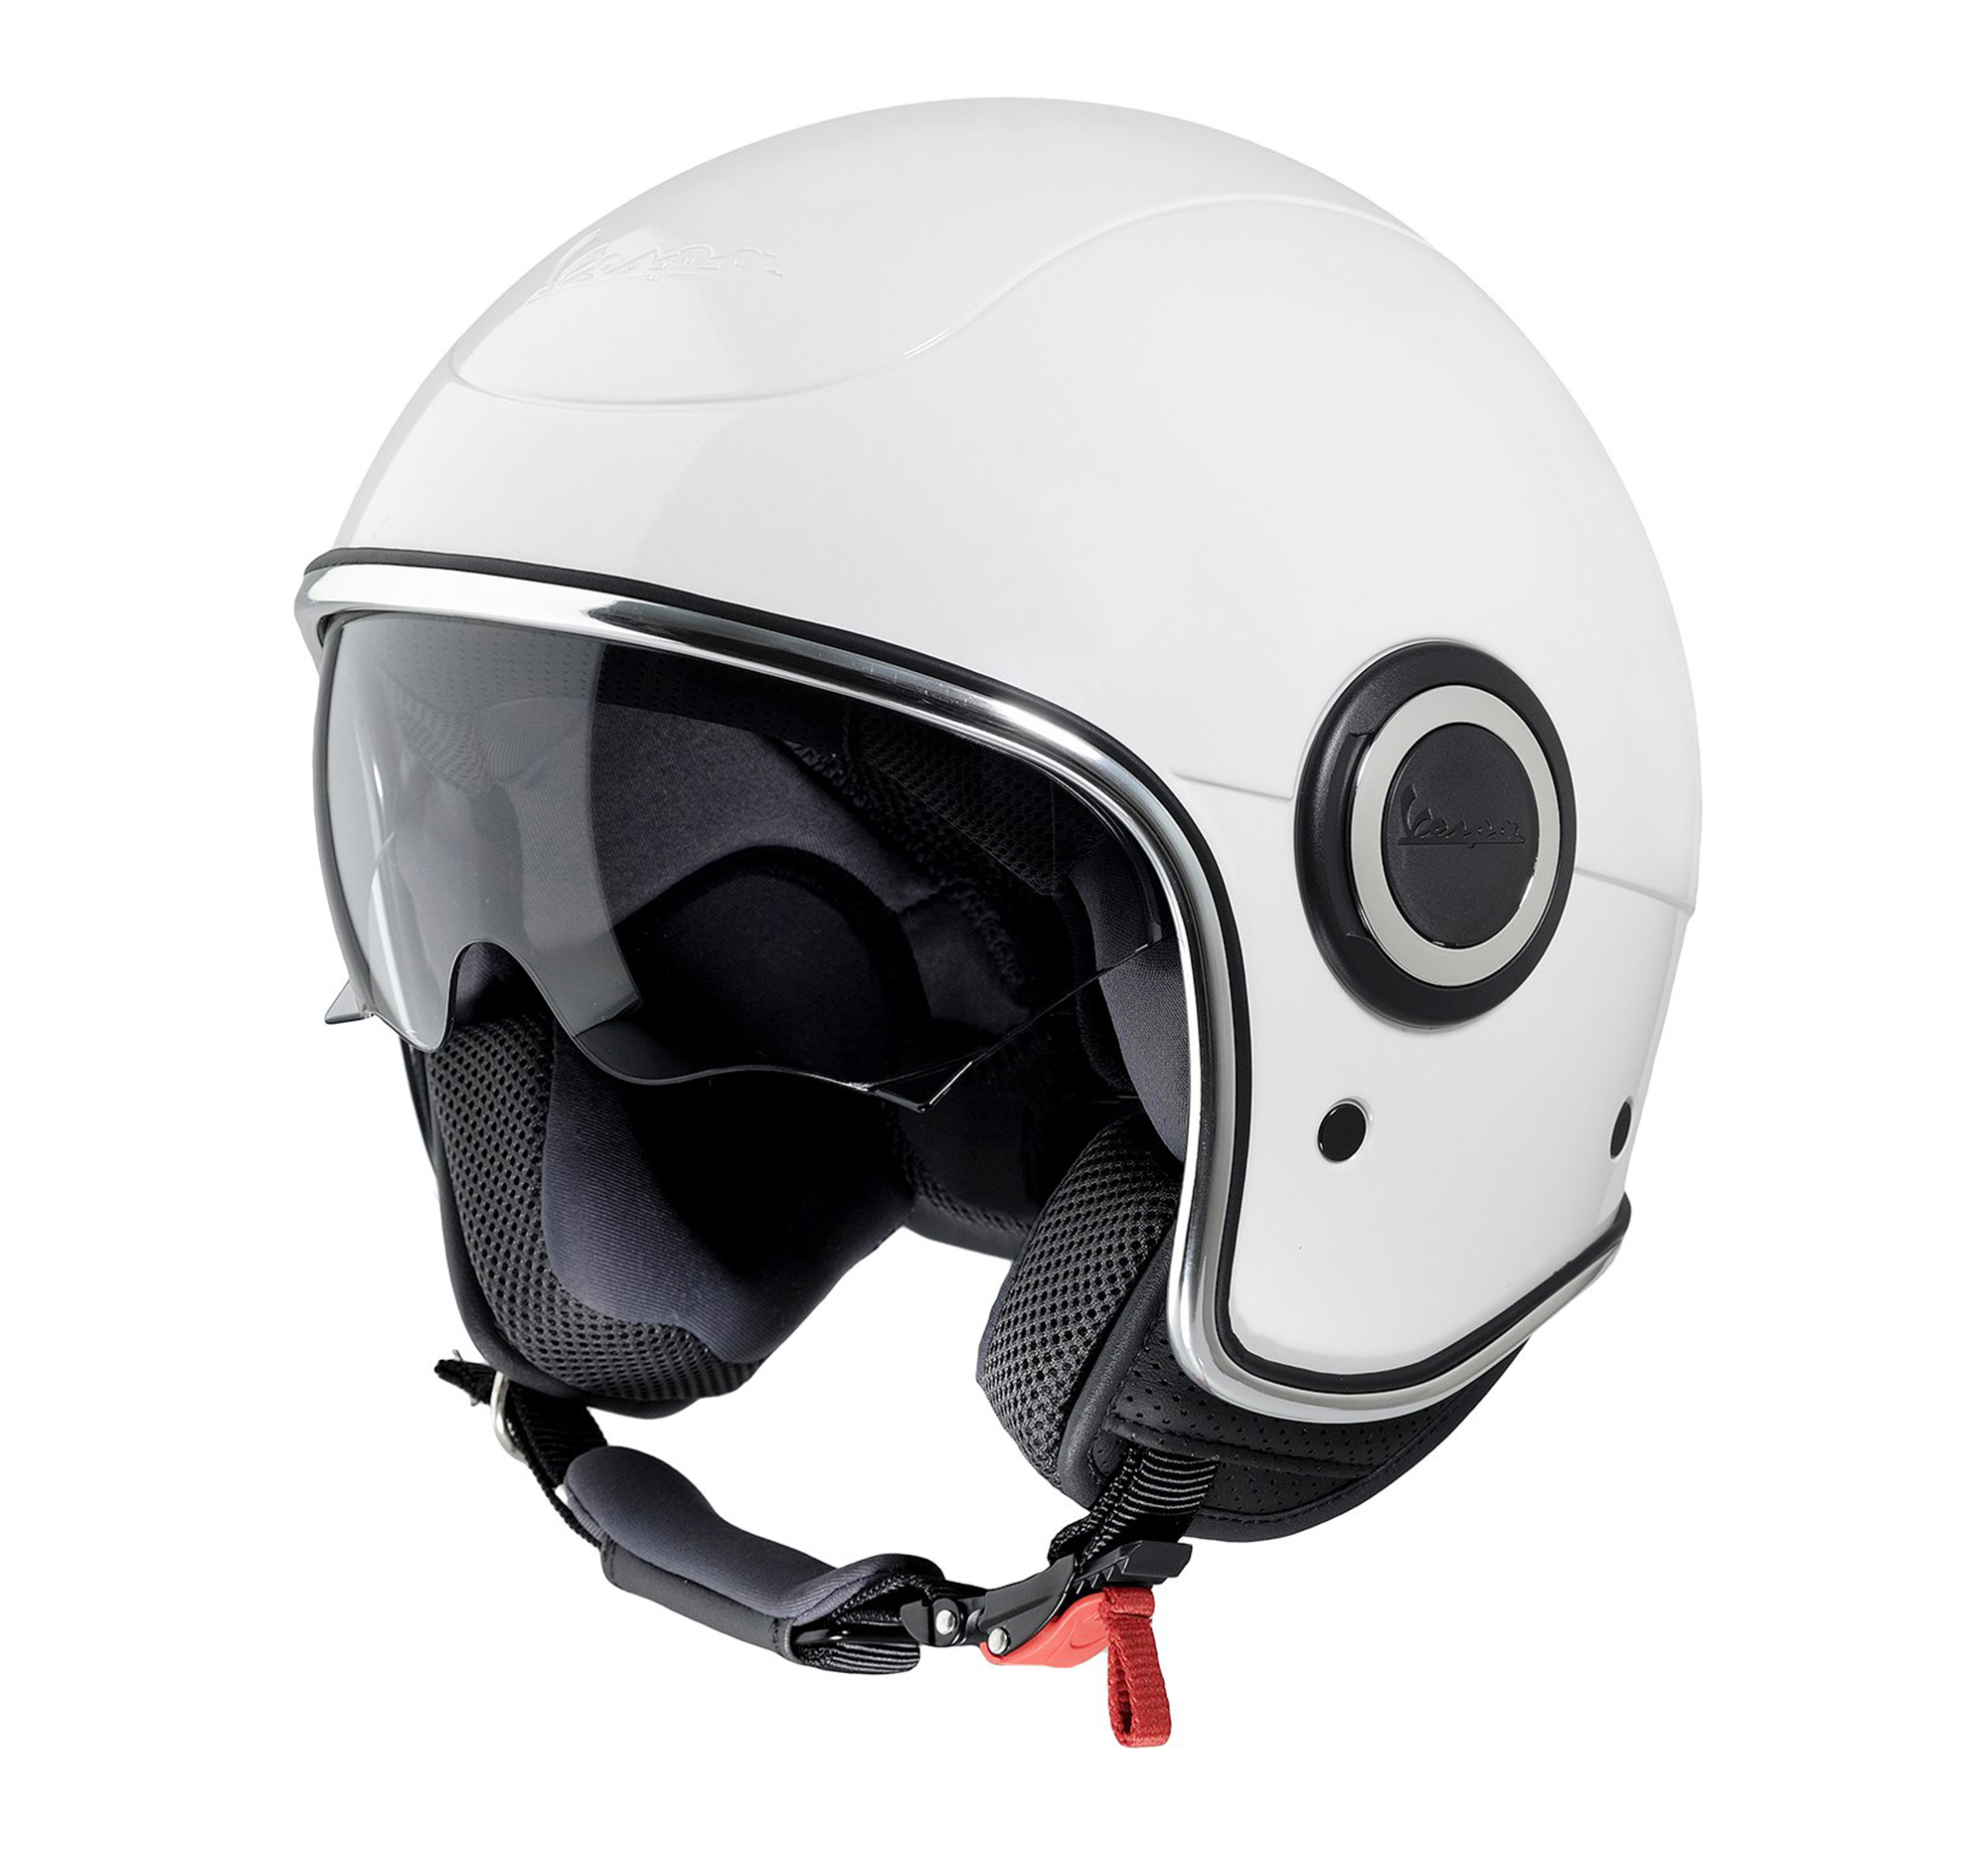 spreiding Verpletteren traagheid Vespa Jet Helm VJ1 wit | Piaggio-Vespa Online Shop by RWN